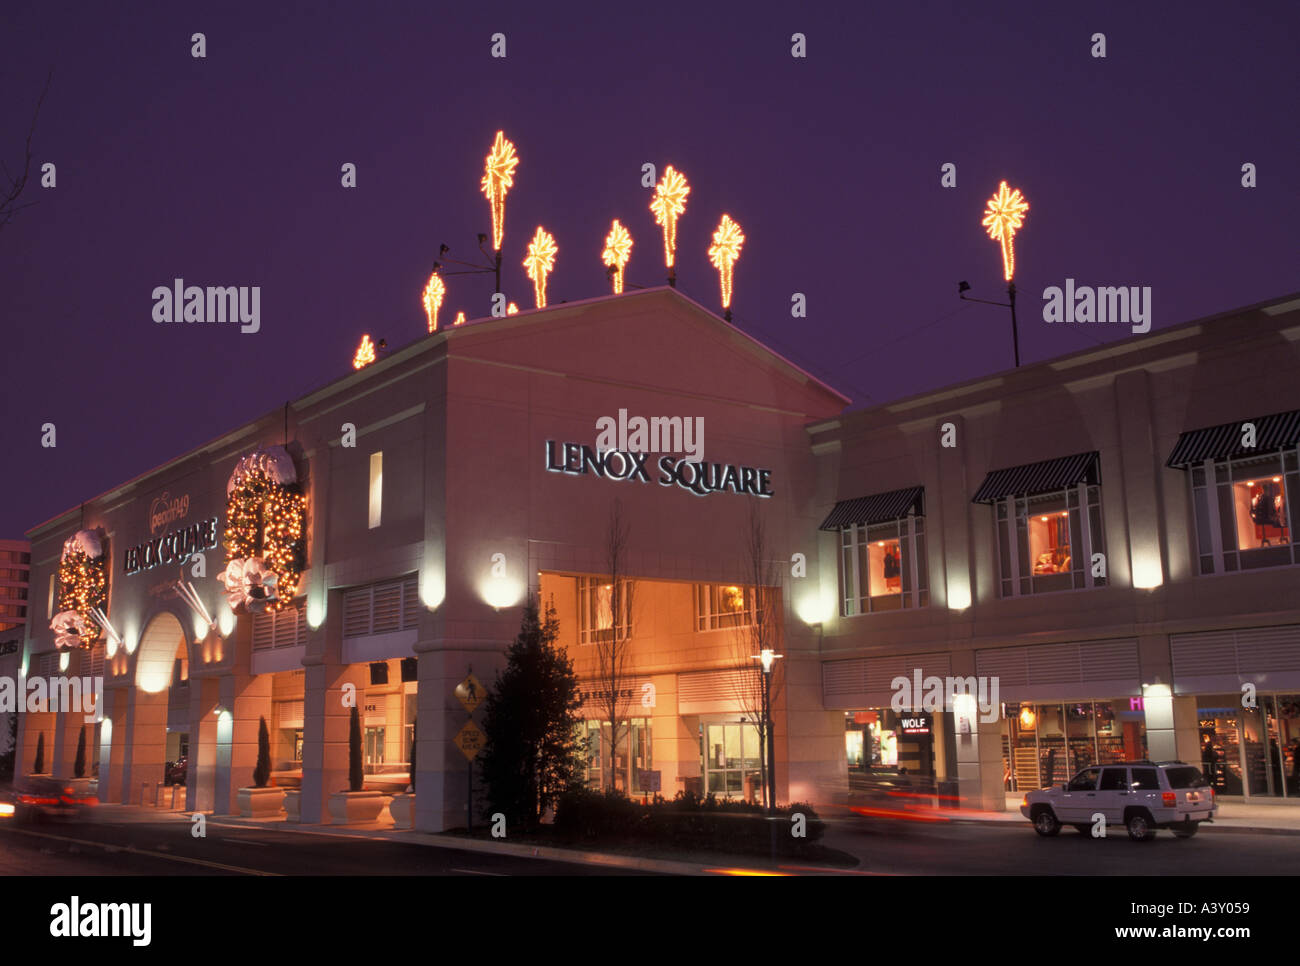 26 Lenox Mall Images, Stock Photos, 3D objects, & Vectors